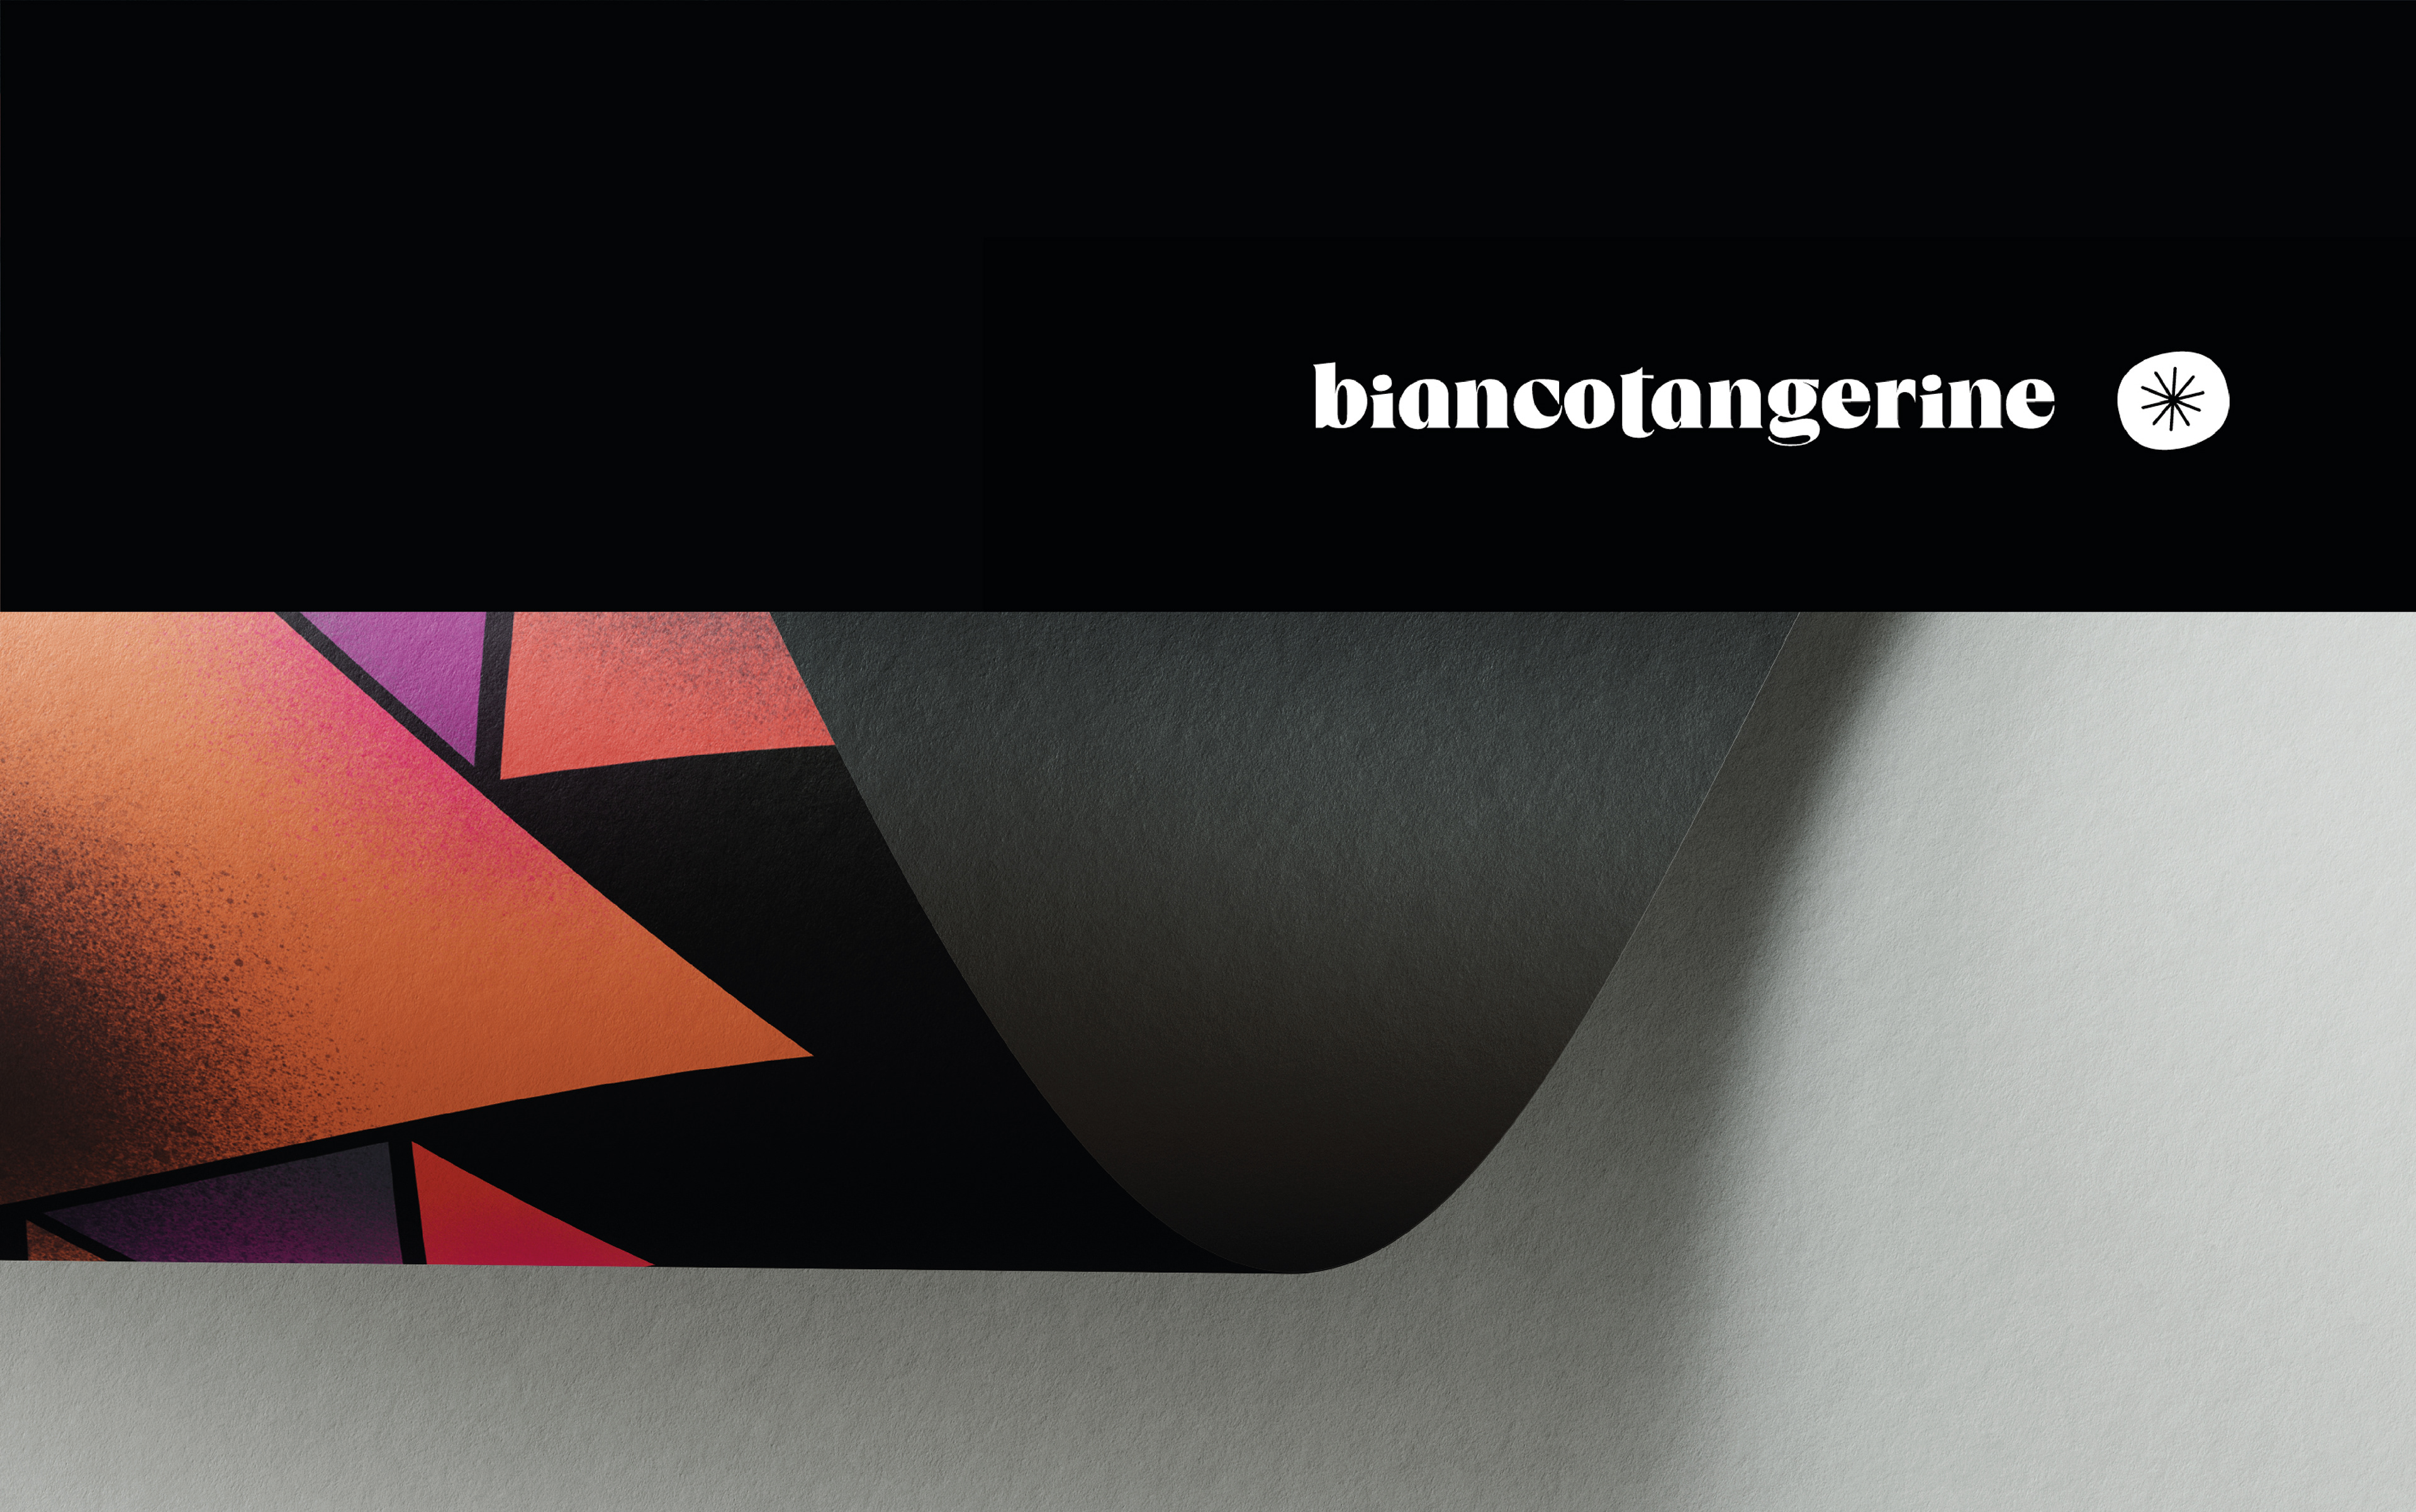 Bianco Tangerine - Bianco Tangerine - Brand identity